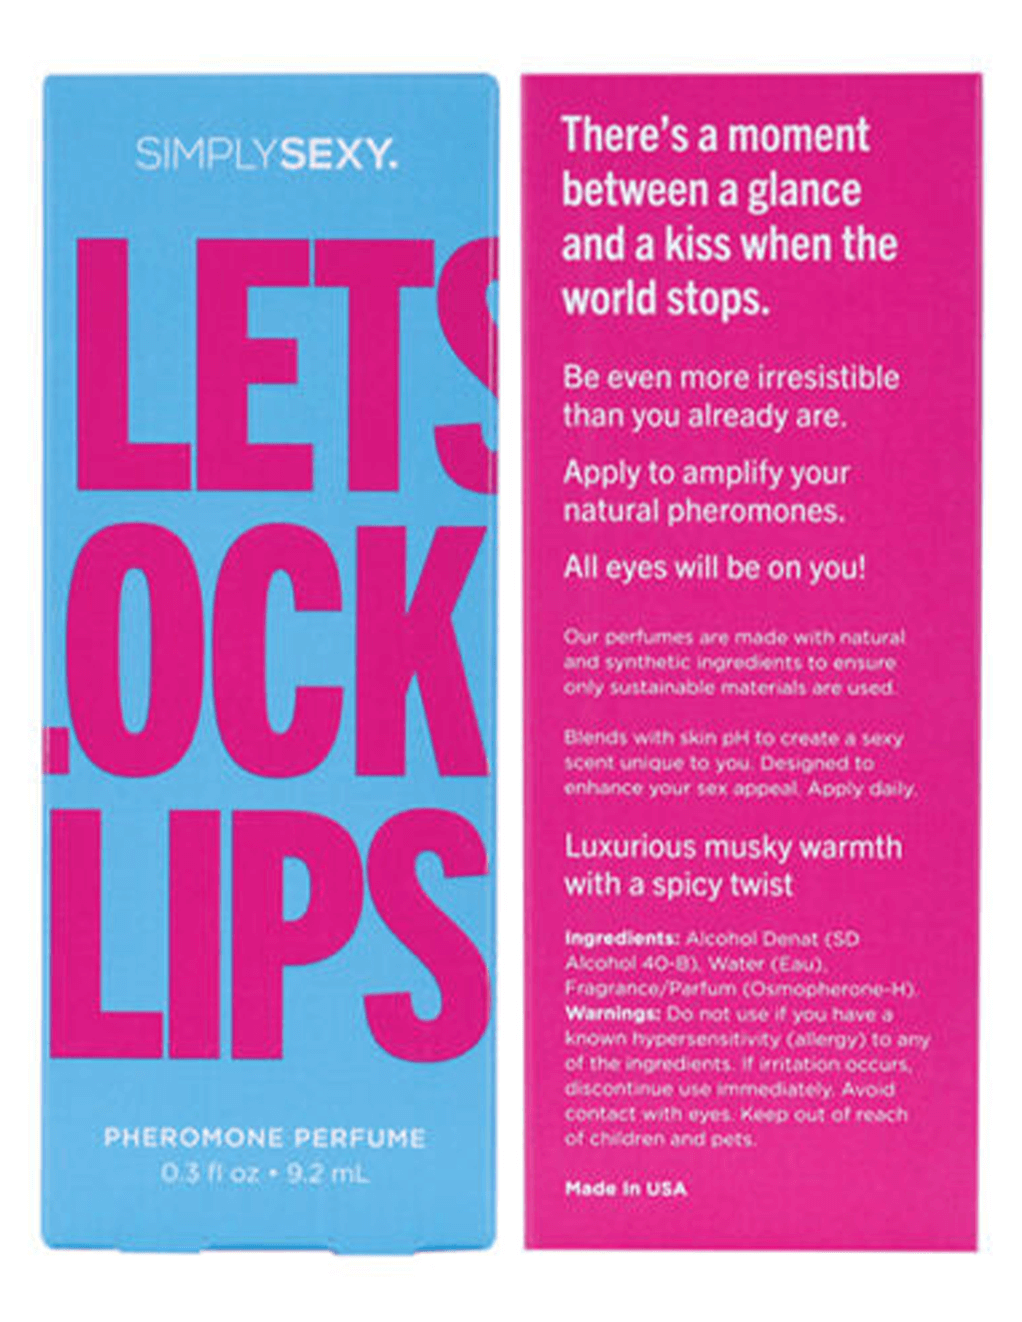 Simply Sexy Let's Lock Lips Pheromone Perfume - Box Details